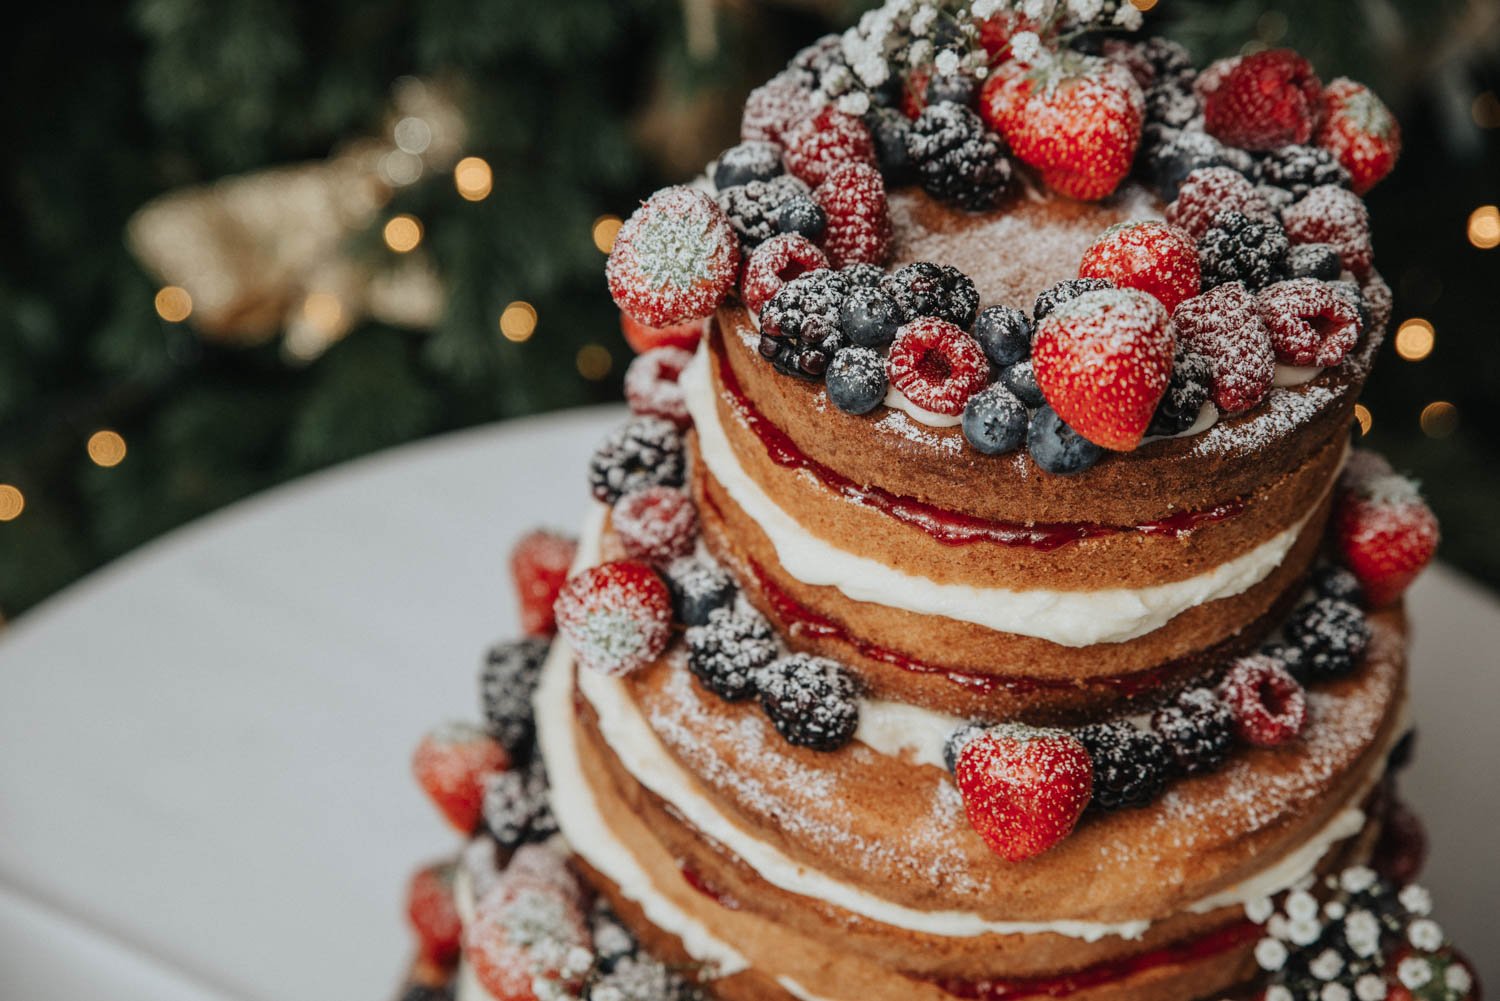 Winter fruit wedding cake with raw sponge, raspberries and blackberries with icing sugar dusting